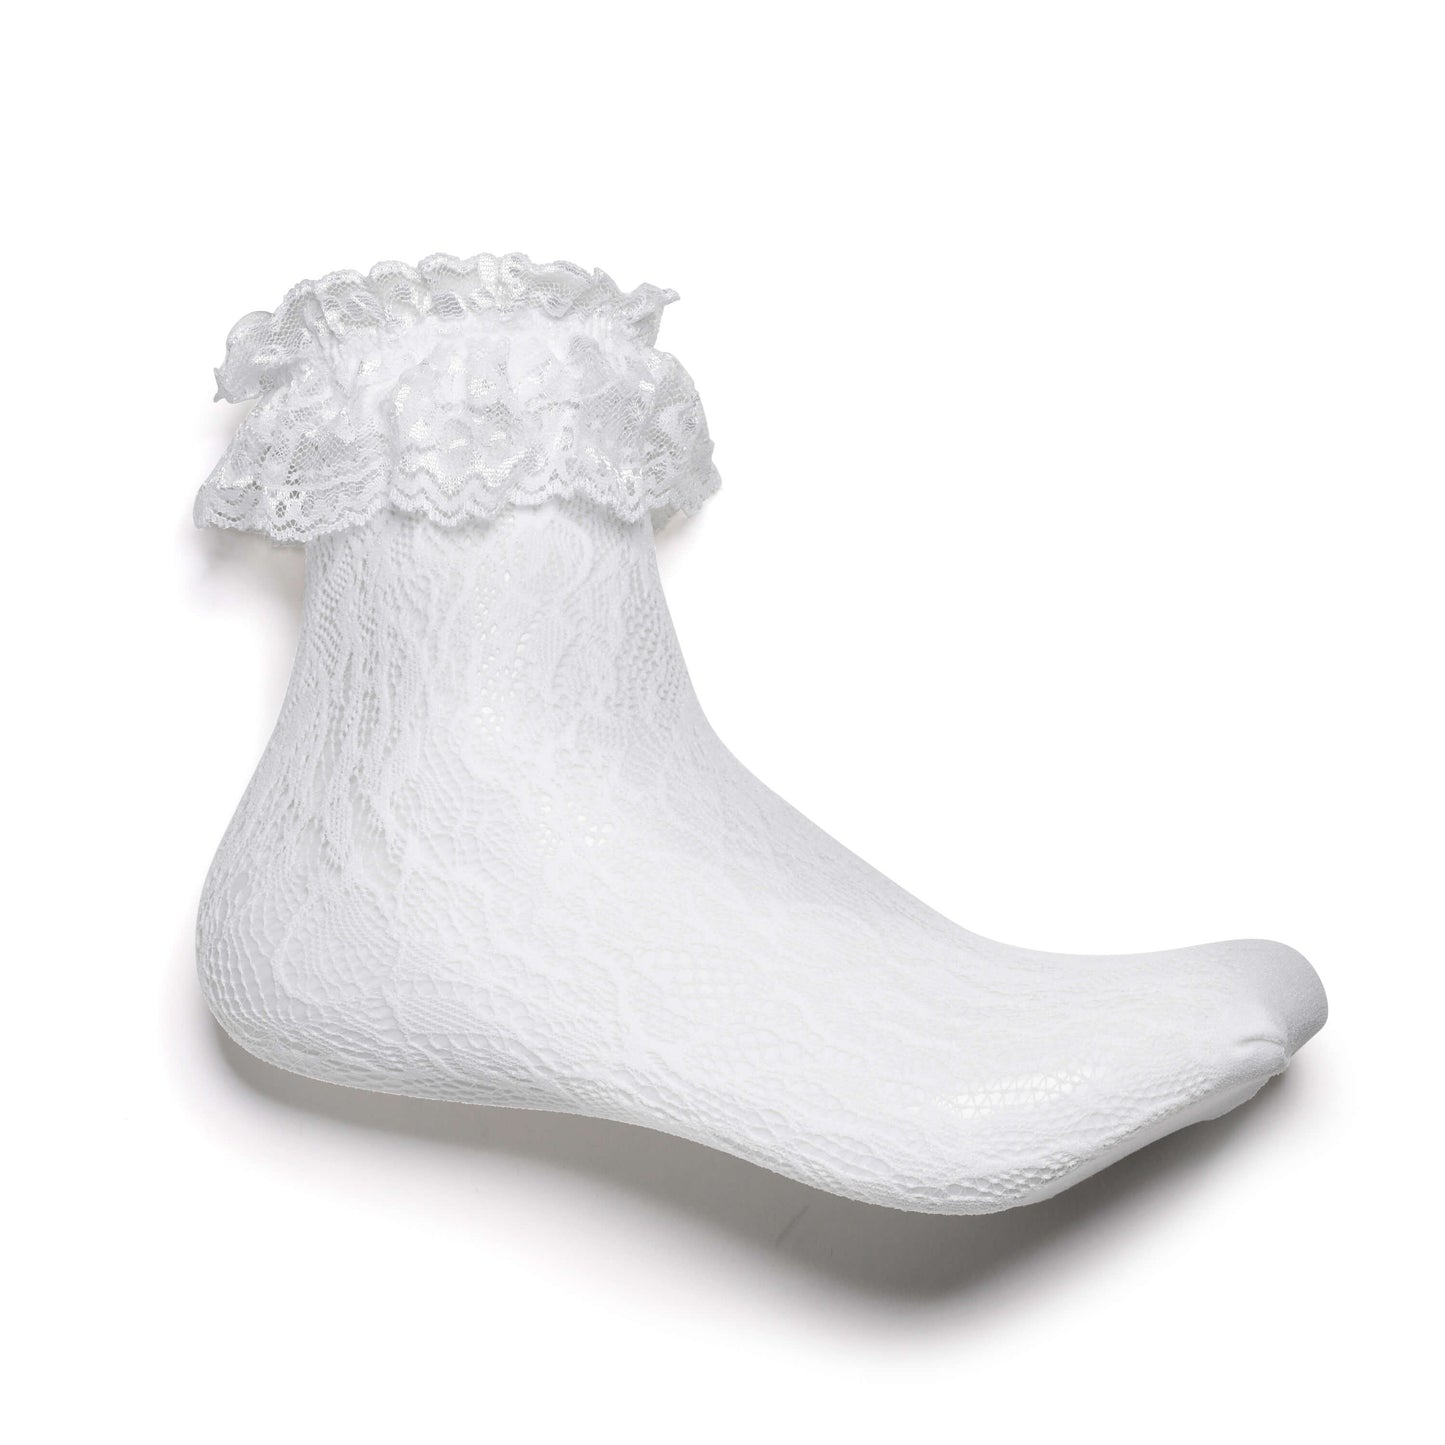 Heiress White Lace Ruffle Socks - Accessories - KOI Footwear - White - Main View